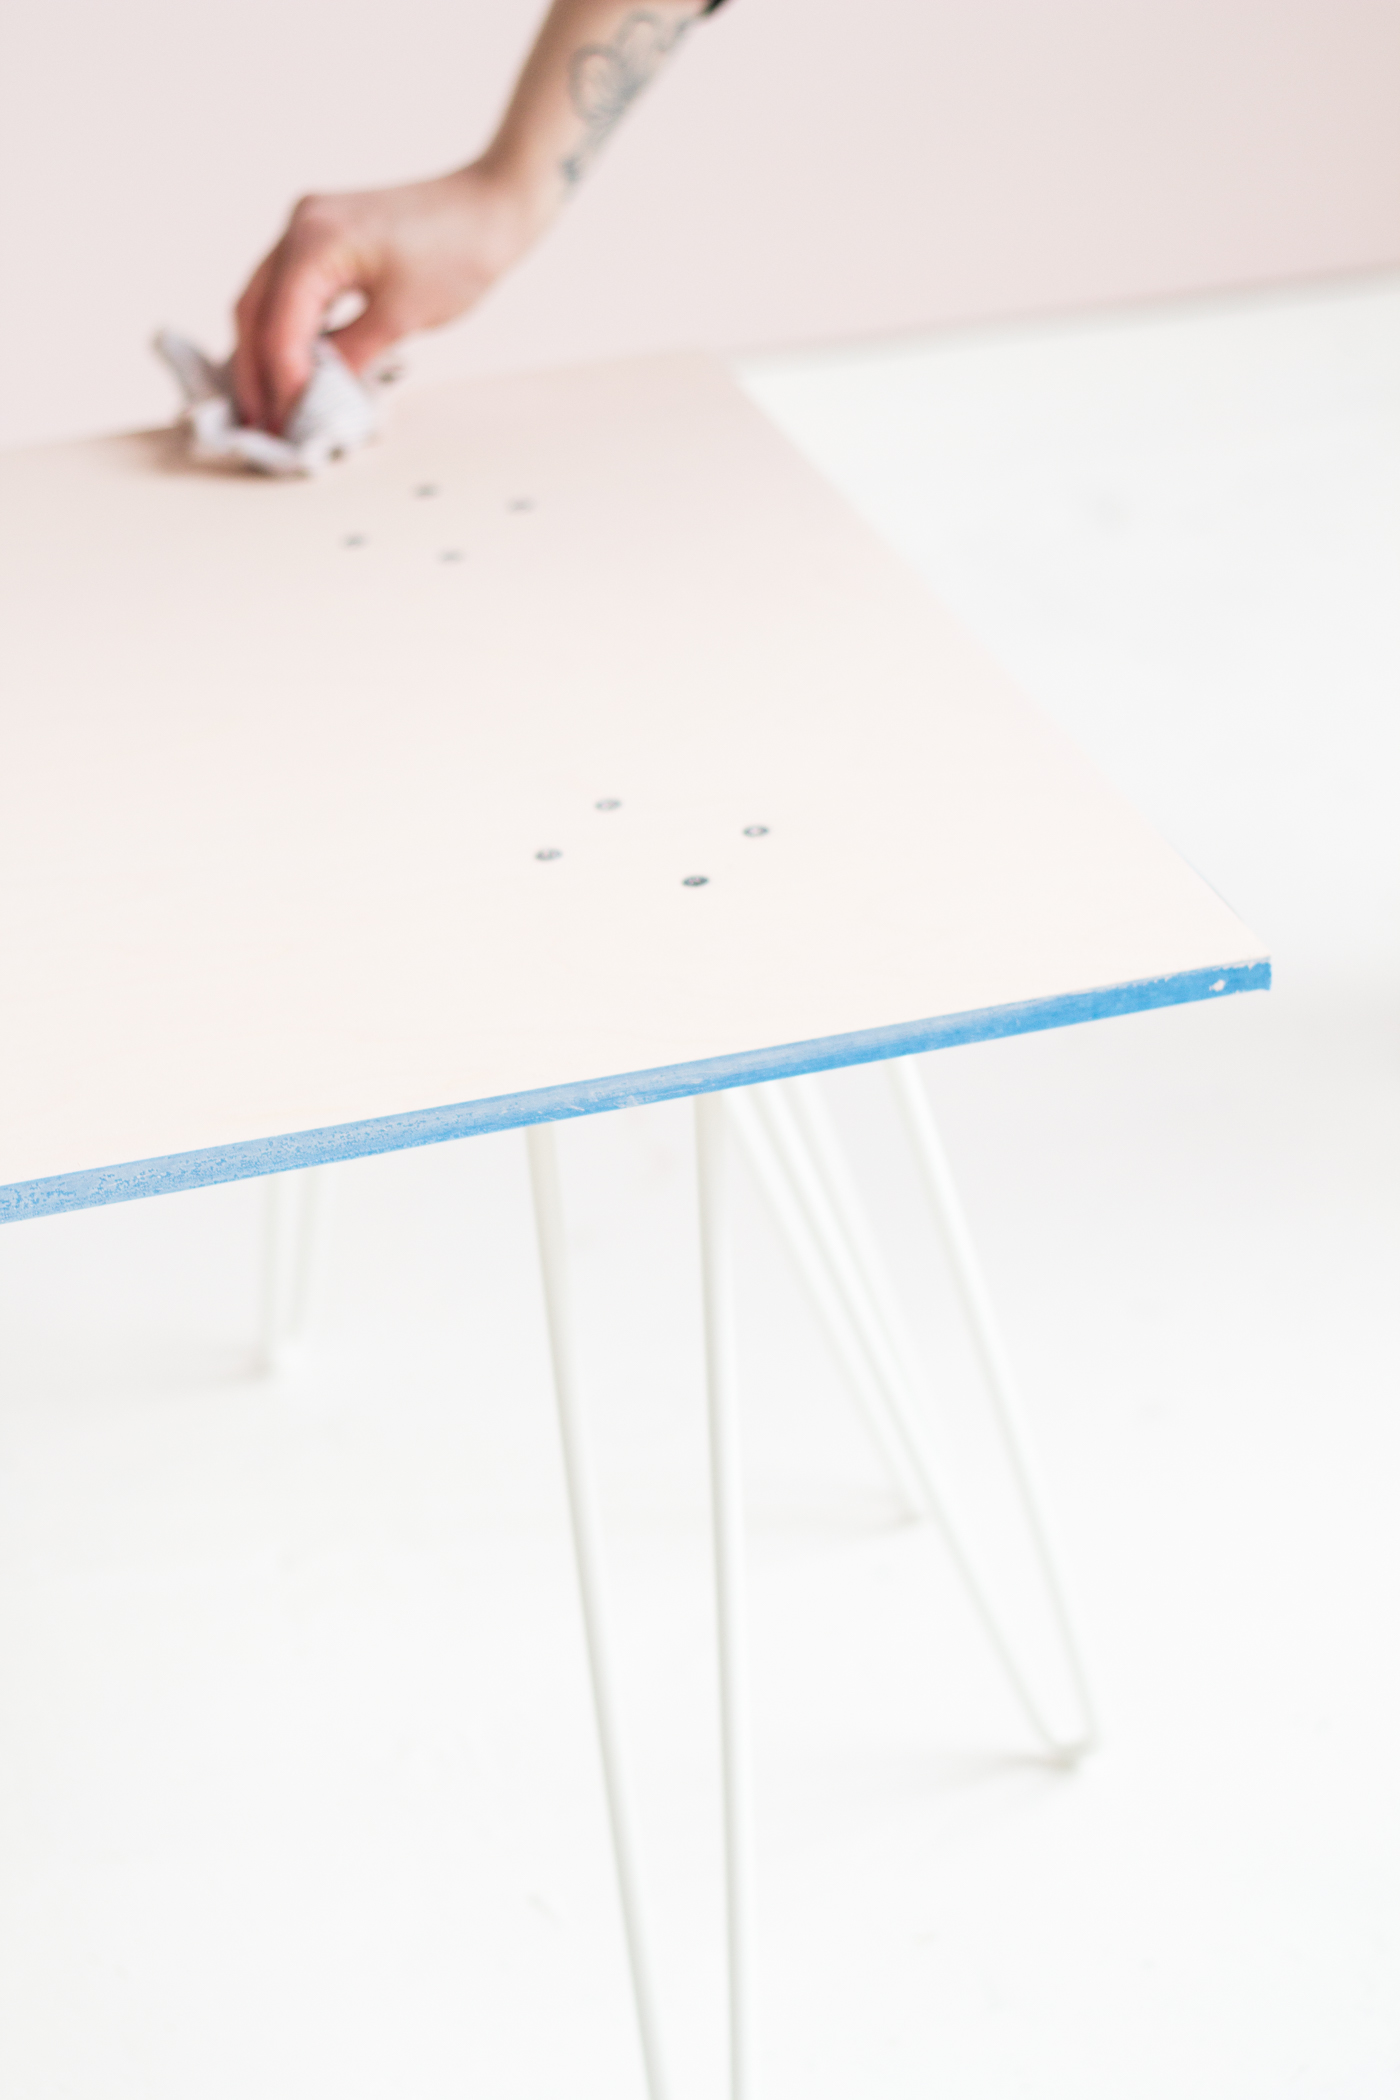 DIY SWENYO Skurniture Pink Washed Plywood Coffee Table | @fallfordiy